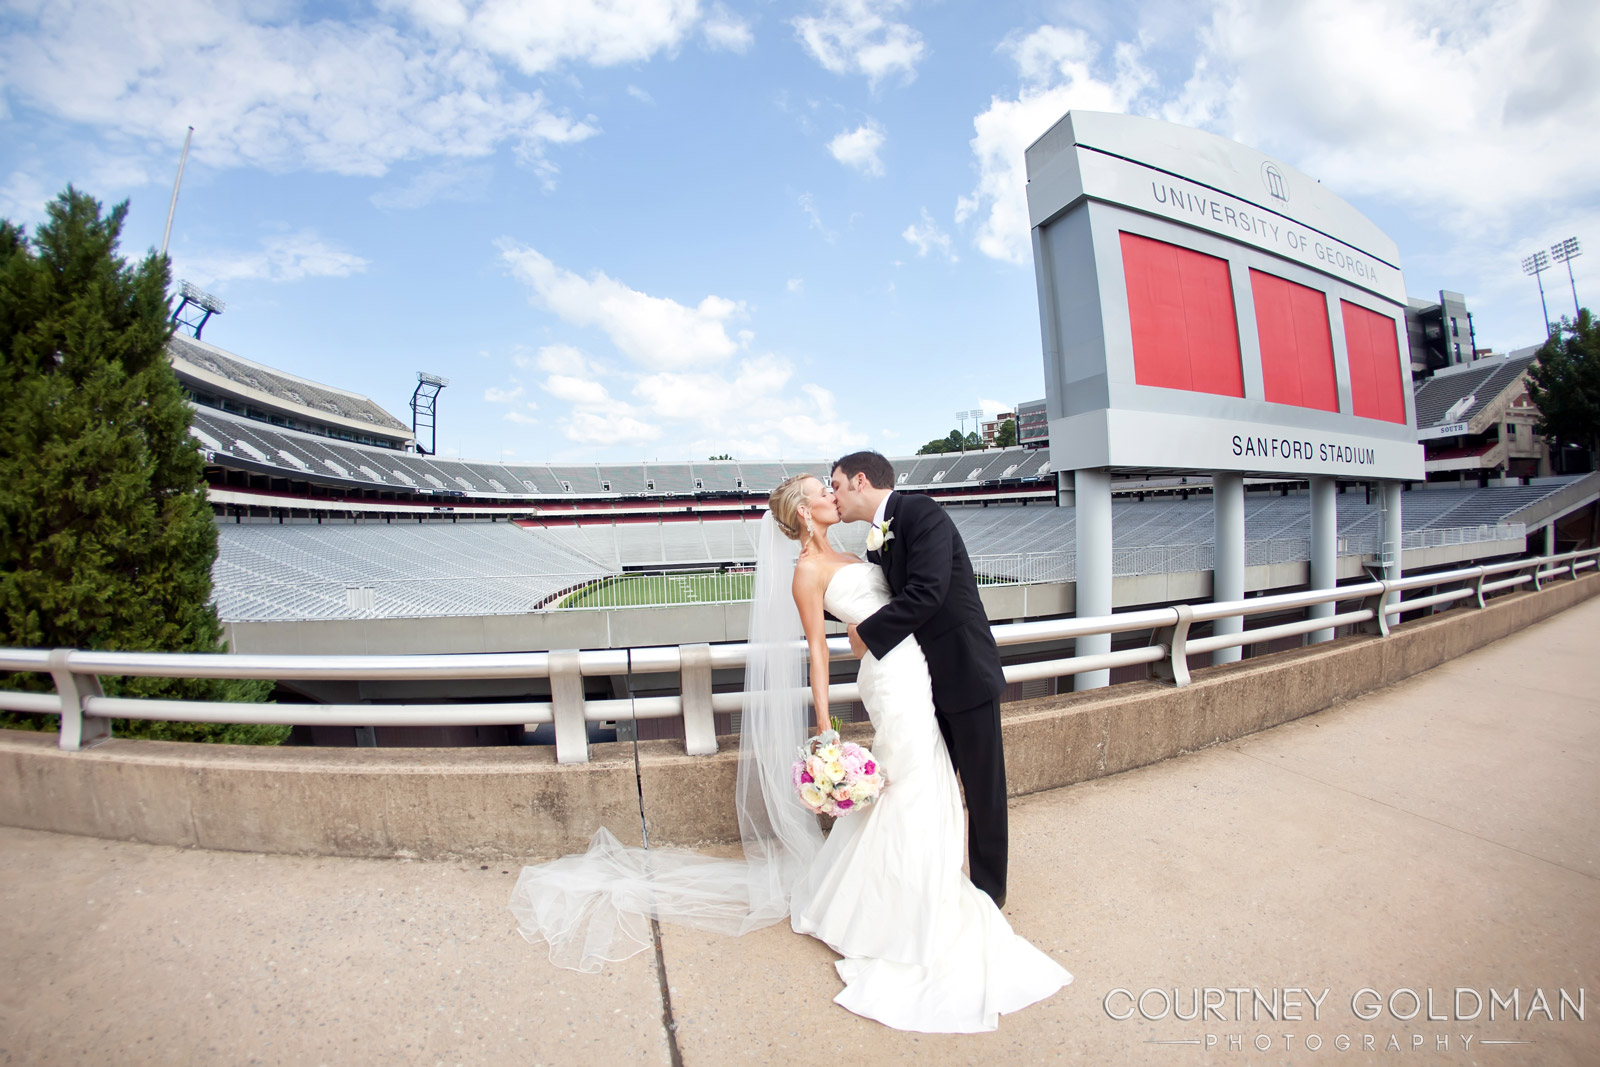 Atlanta-Wedding-Photography-by-Courtney-Goldman-22.jpg